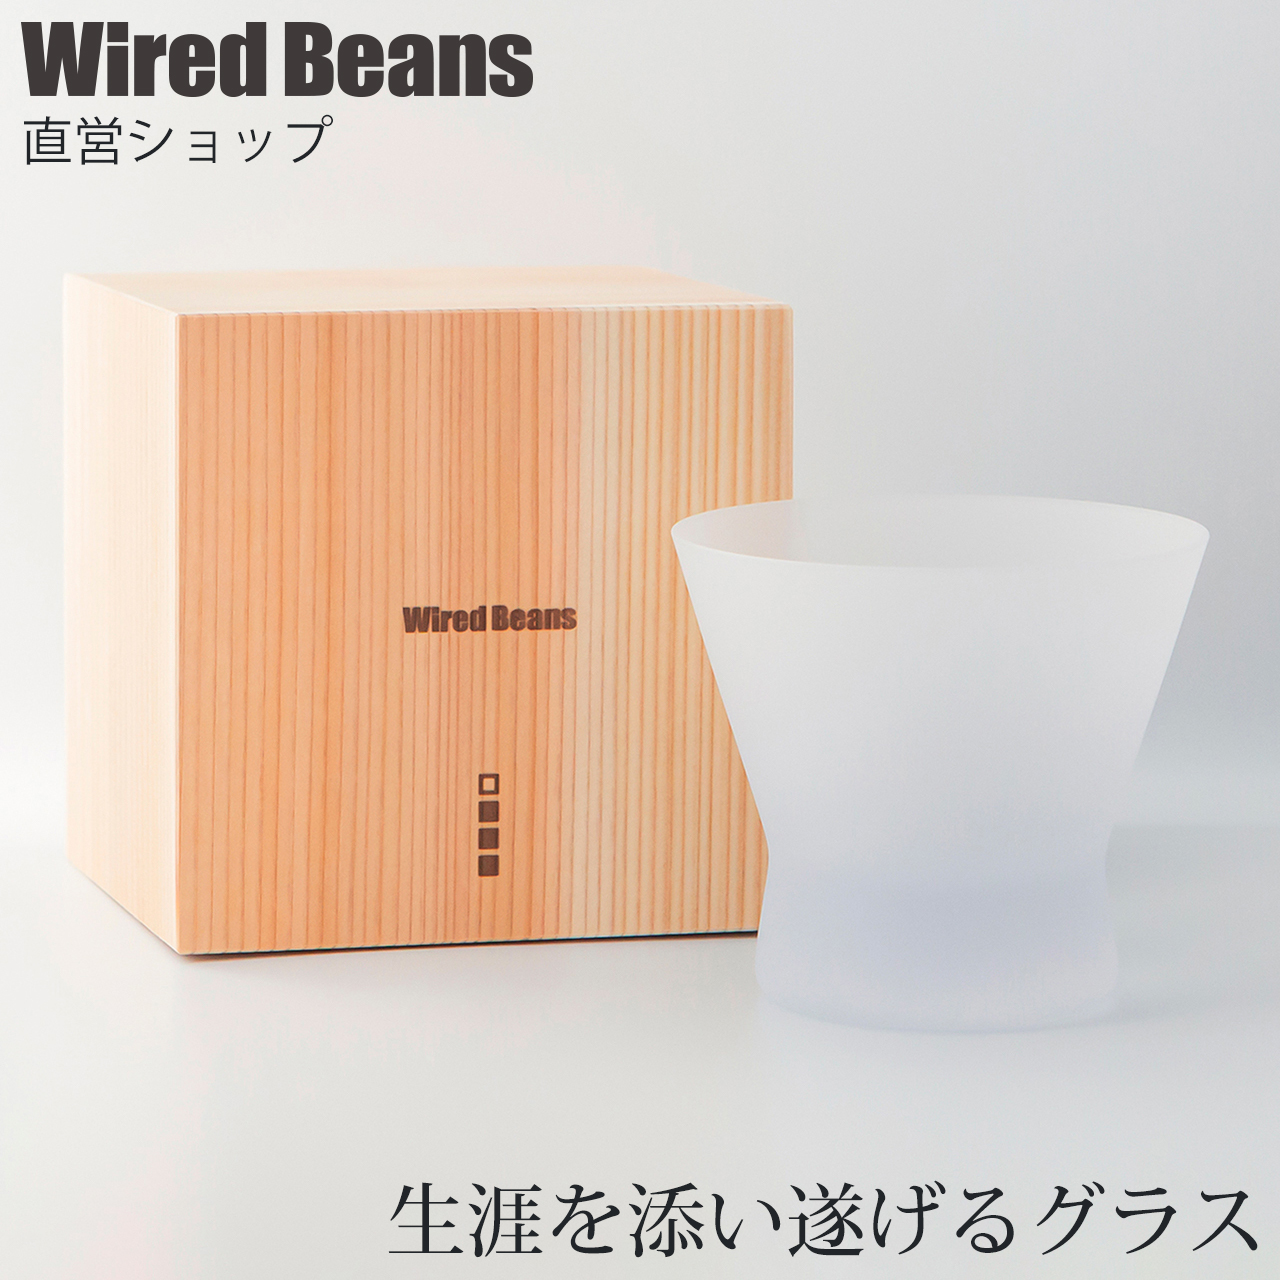 Wired Beans メーカー直販 プレゼント ウイスキーグラス 付与 生涯を添い遂げるグラス ロック 訳あり f 国産杉箱入り 日本製 生涯補償付き フロスト ワイヤードビーンズ ギフト エフ ロックグラス